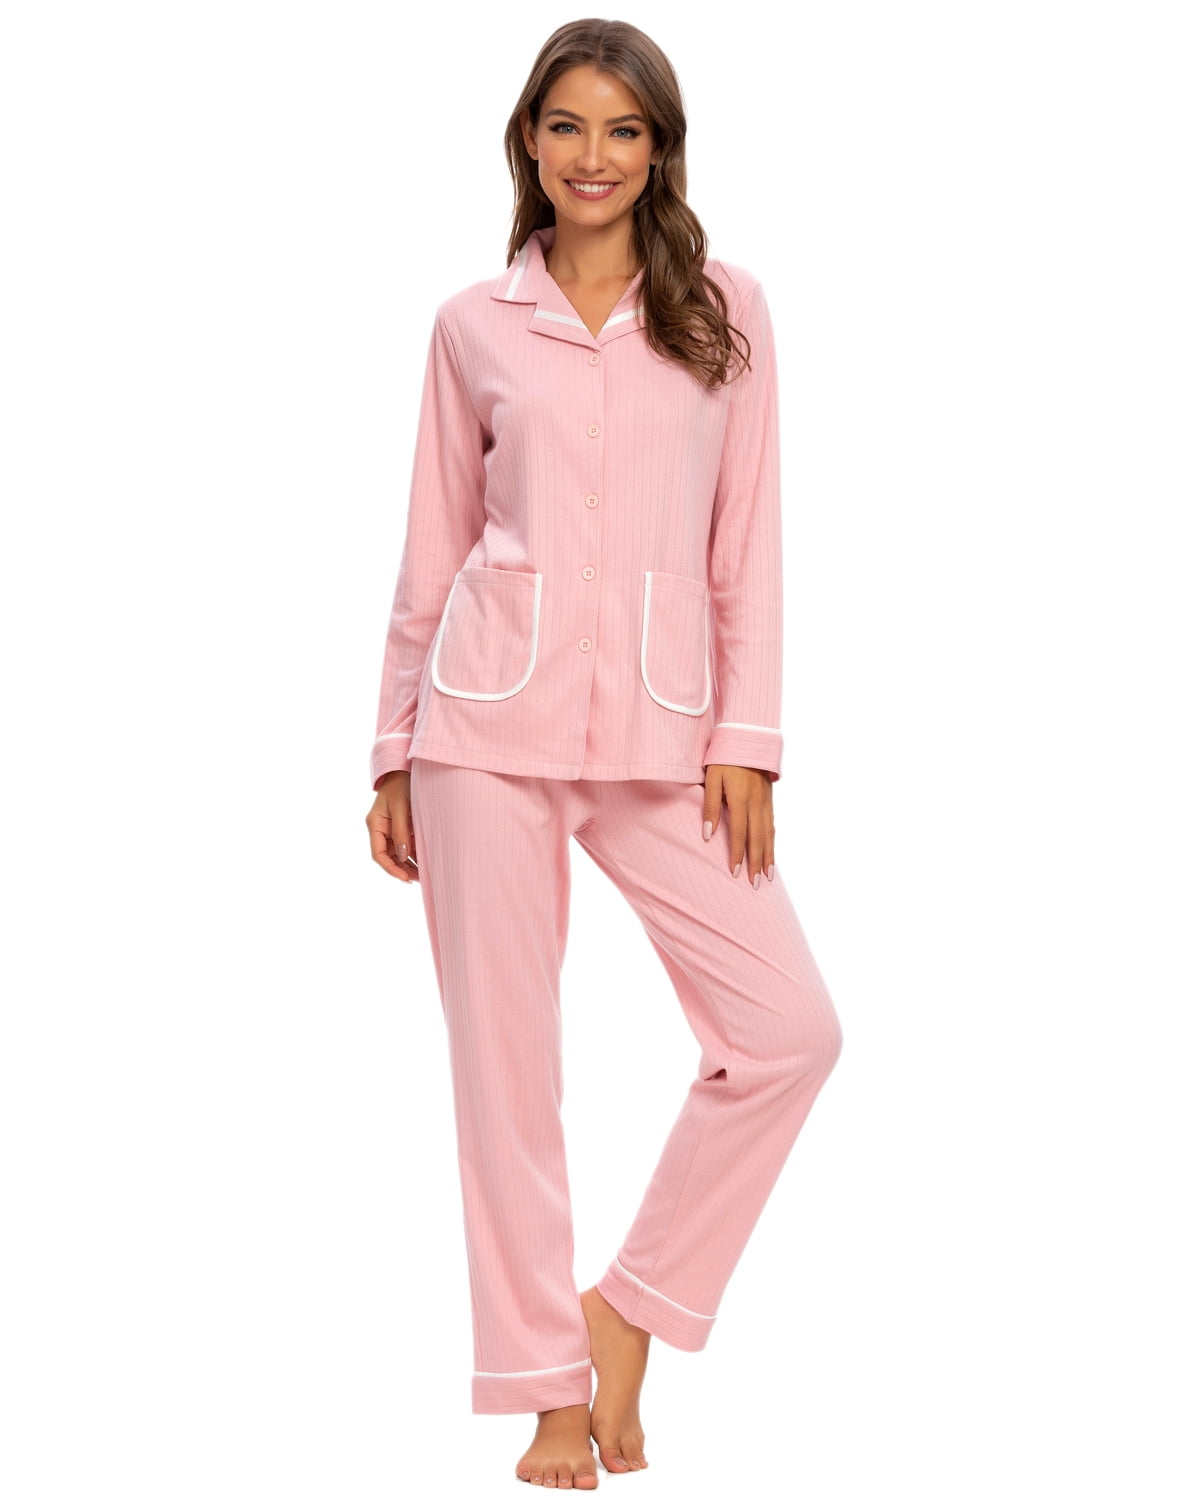 MintLimit Women's Pajamas Set Long Sleeve Cotton Sleepwear Button Down ...